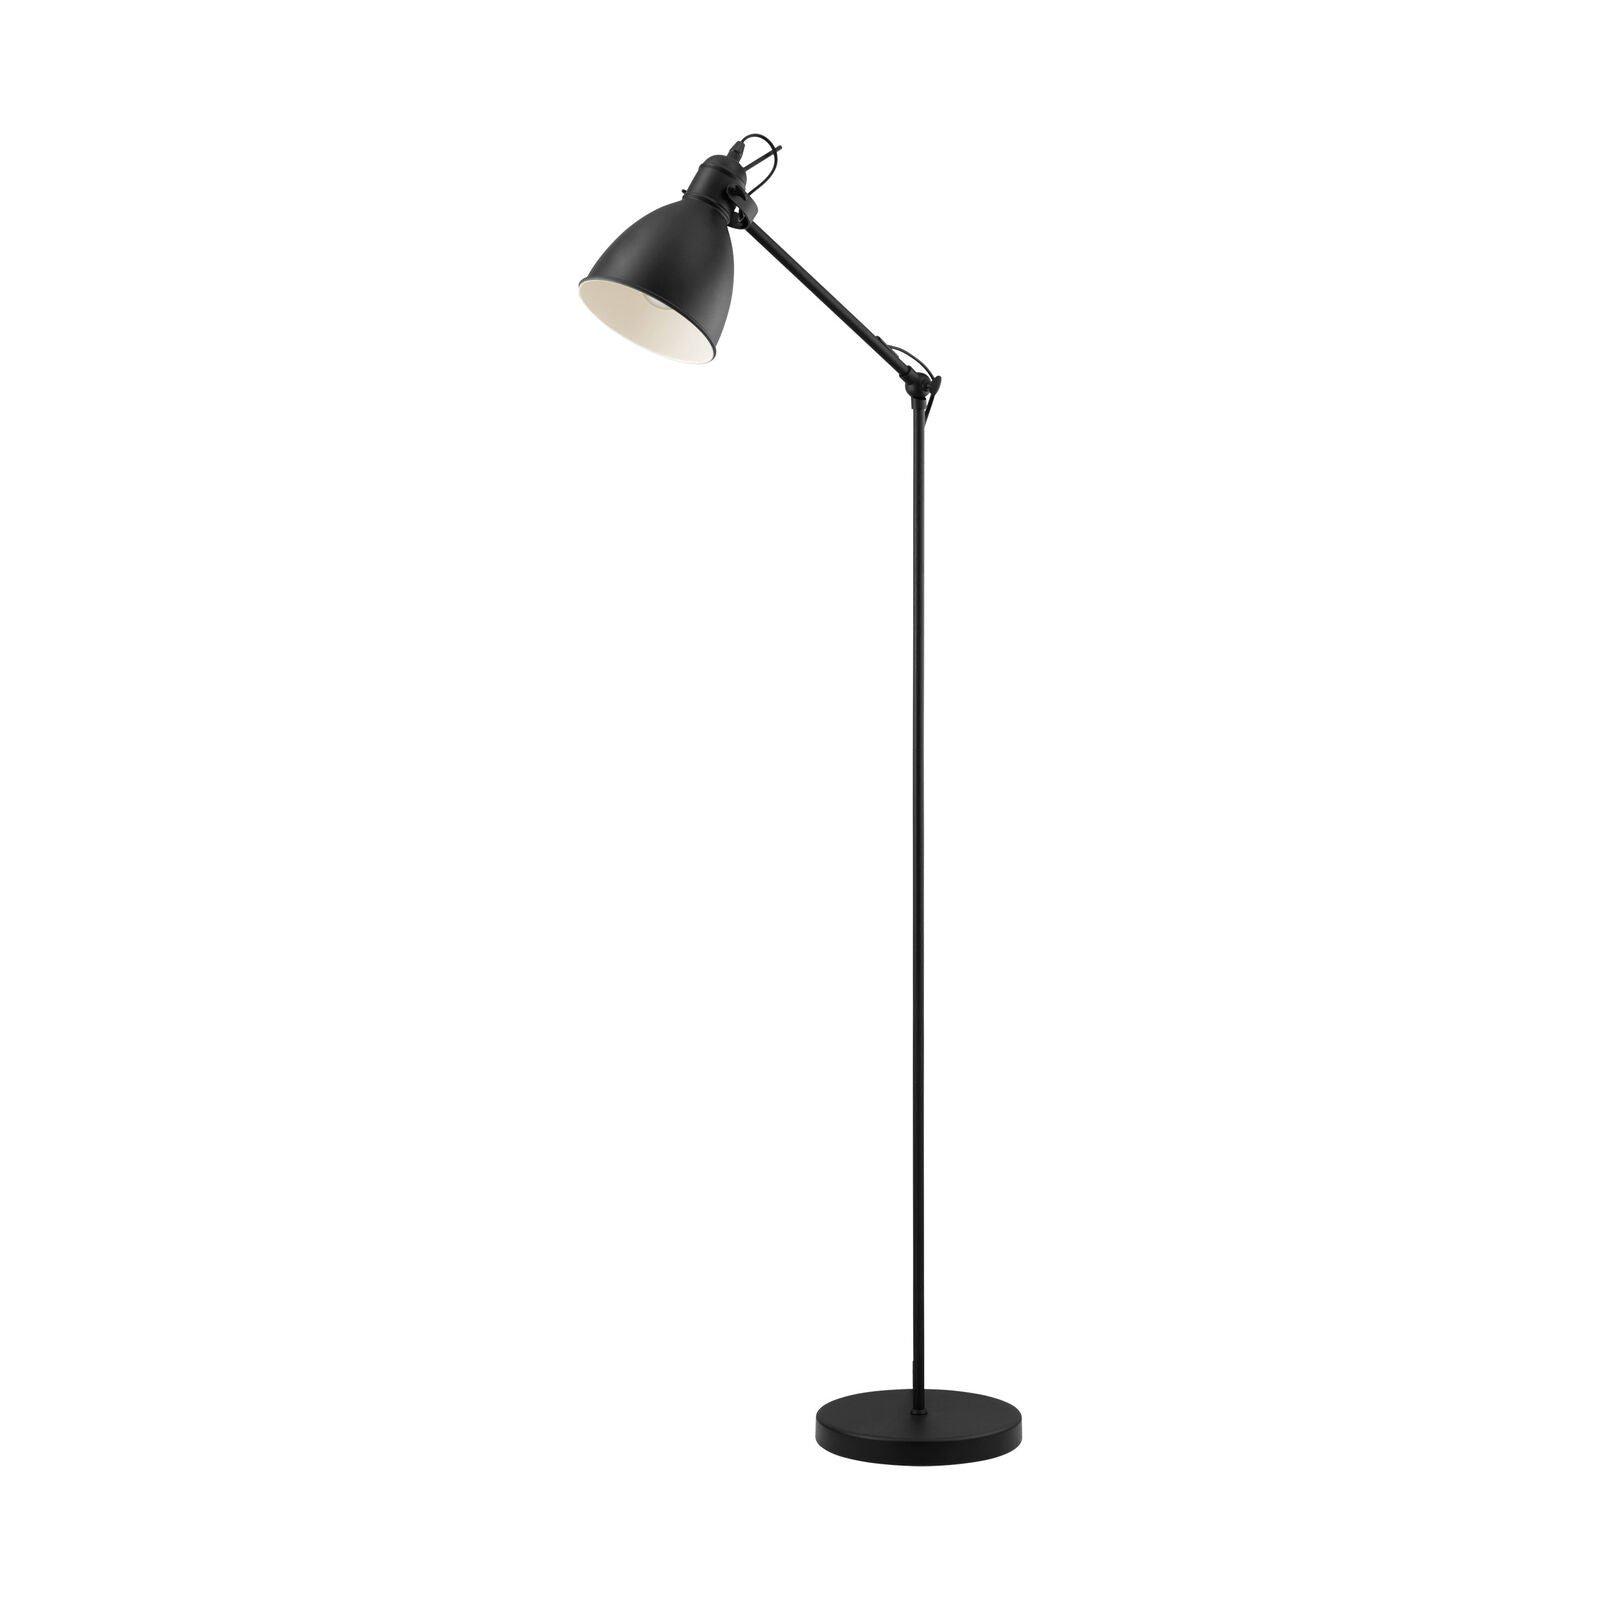 Adjustable Arm Floor Lamp Light Black & White Shade 1 x 40W E27 Bulb